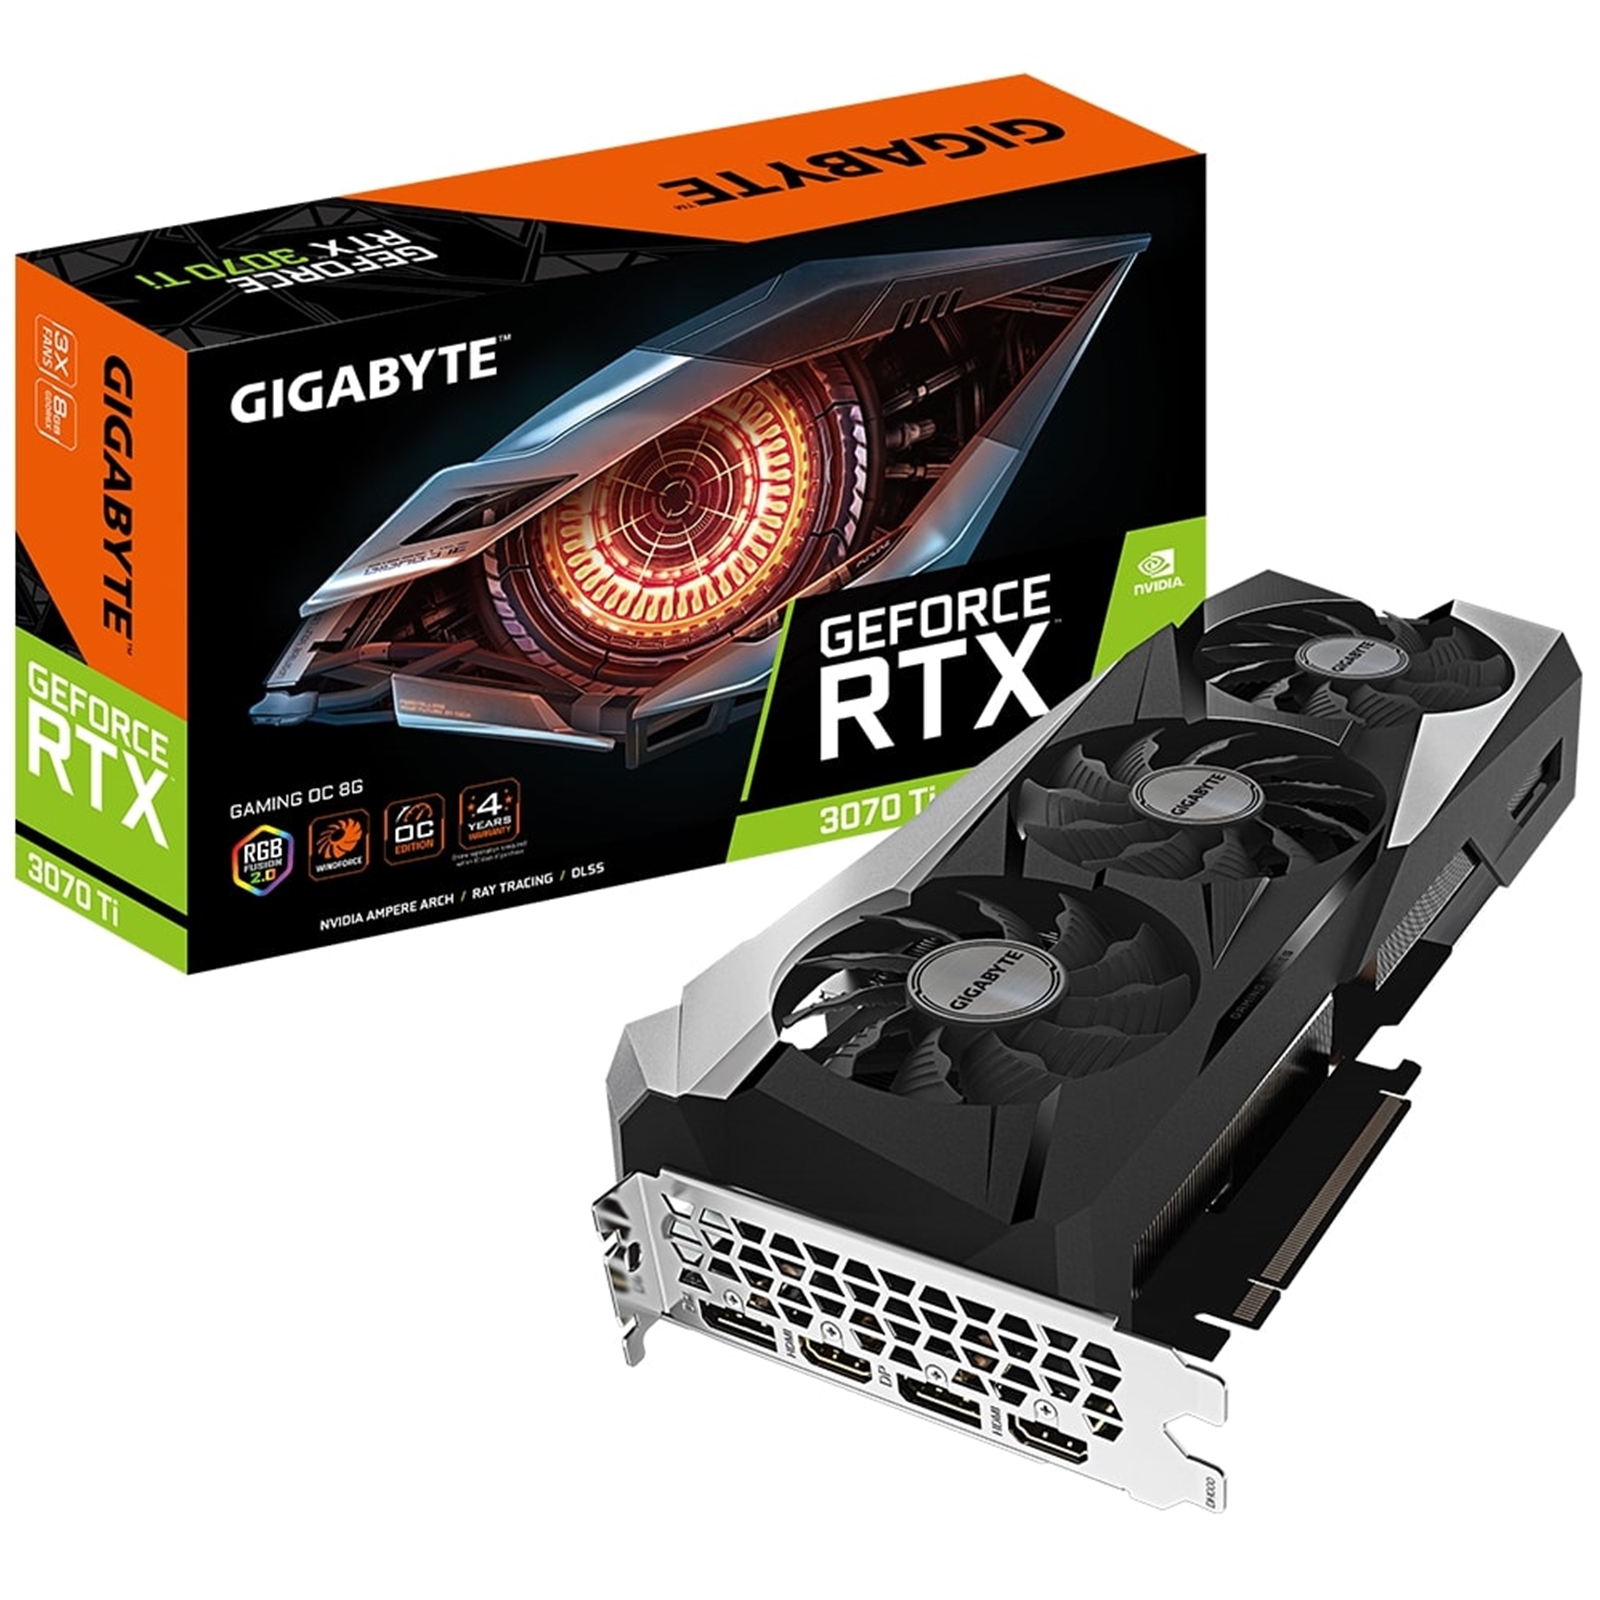 Gigabyte Nvidia GeForce RTX 3070Ti Gaming OC 8GB Triple Fan Graphics Card